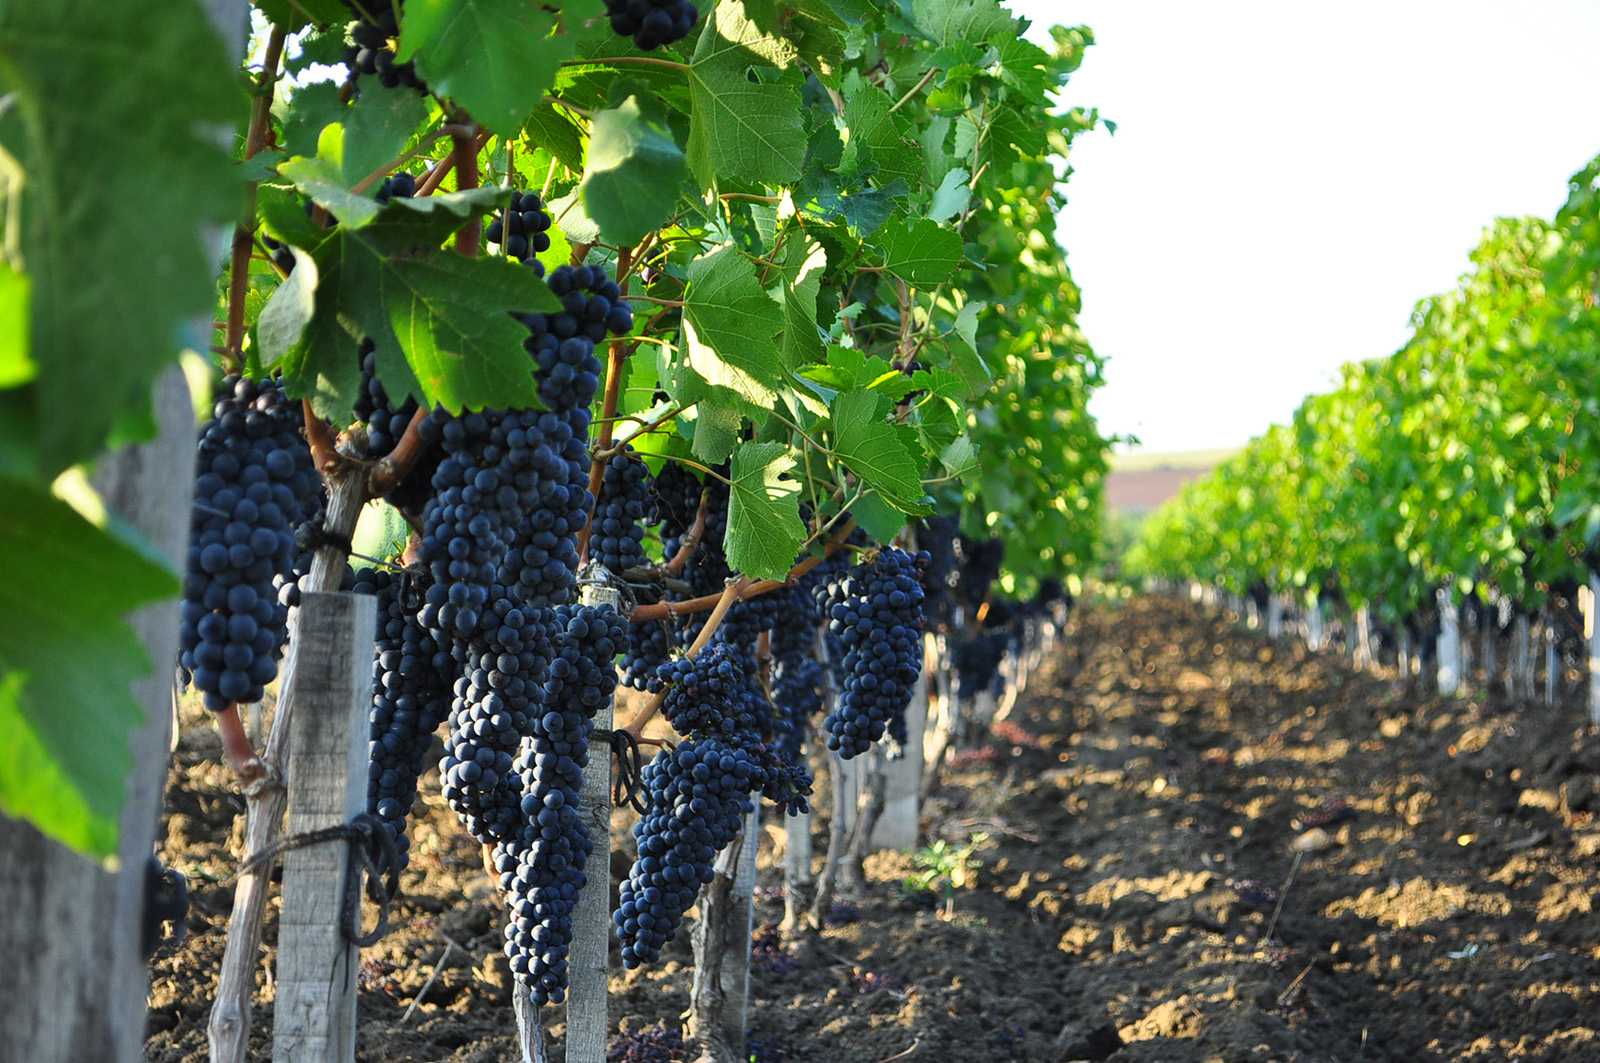 История виноделия франции | wine expertise